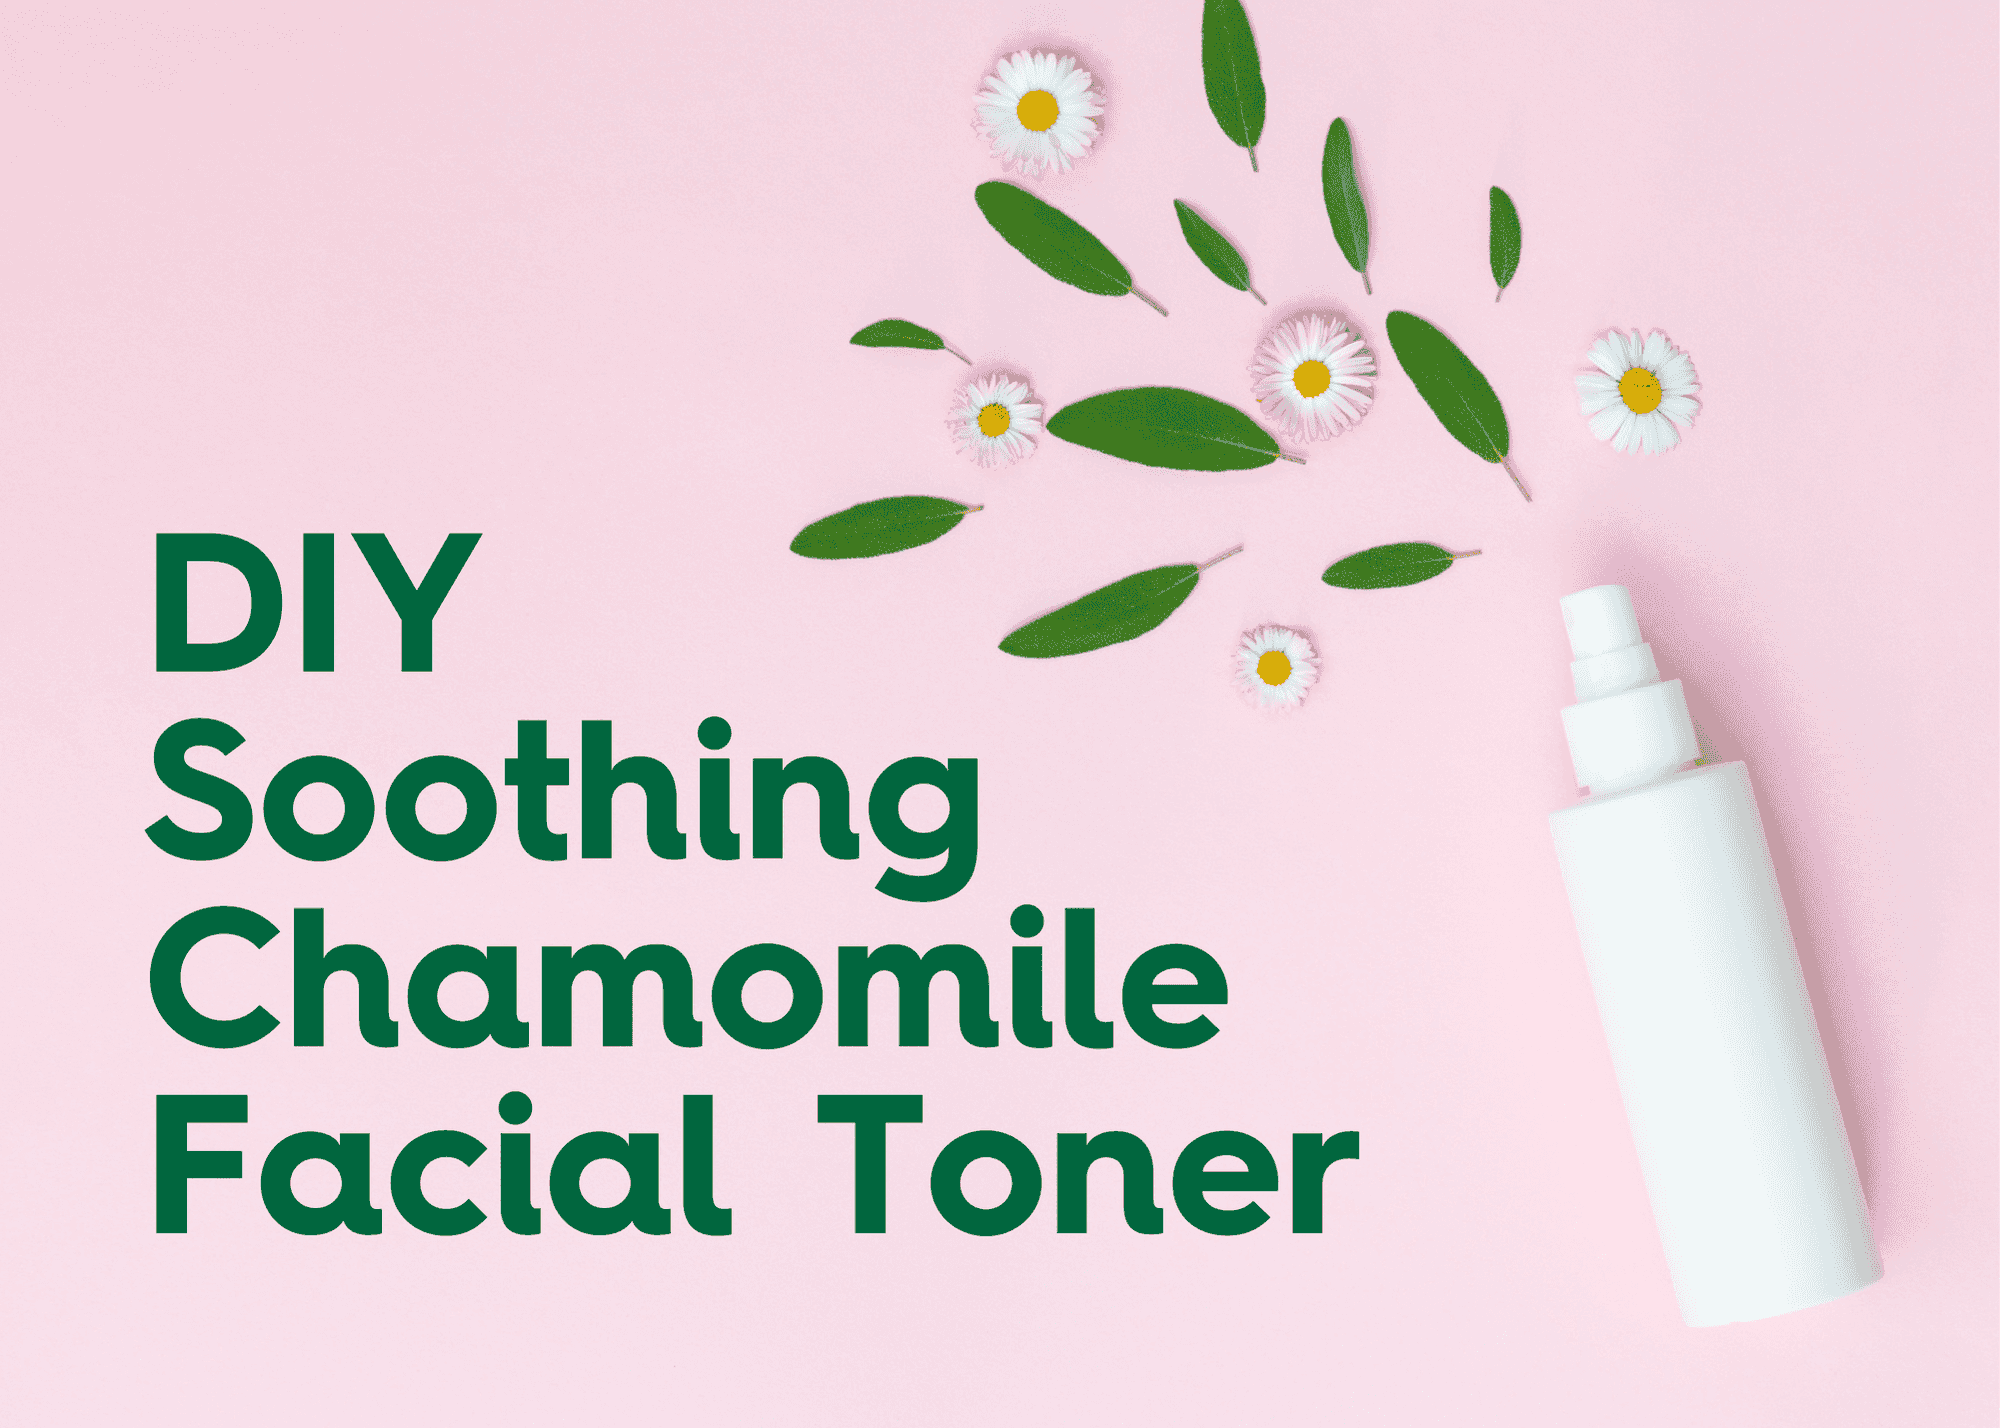 DIY Soothing Chamomile Facial Toner Recipe